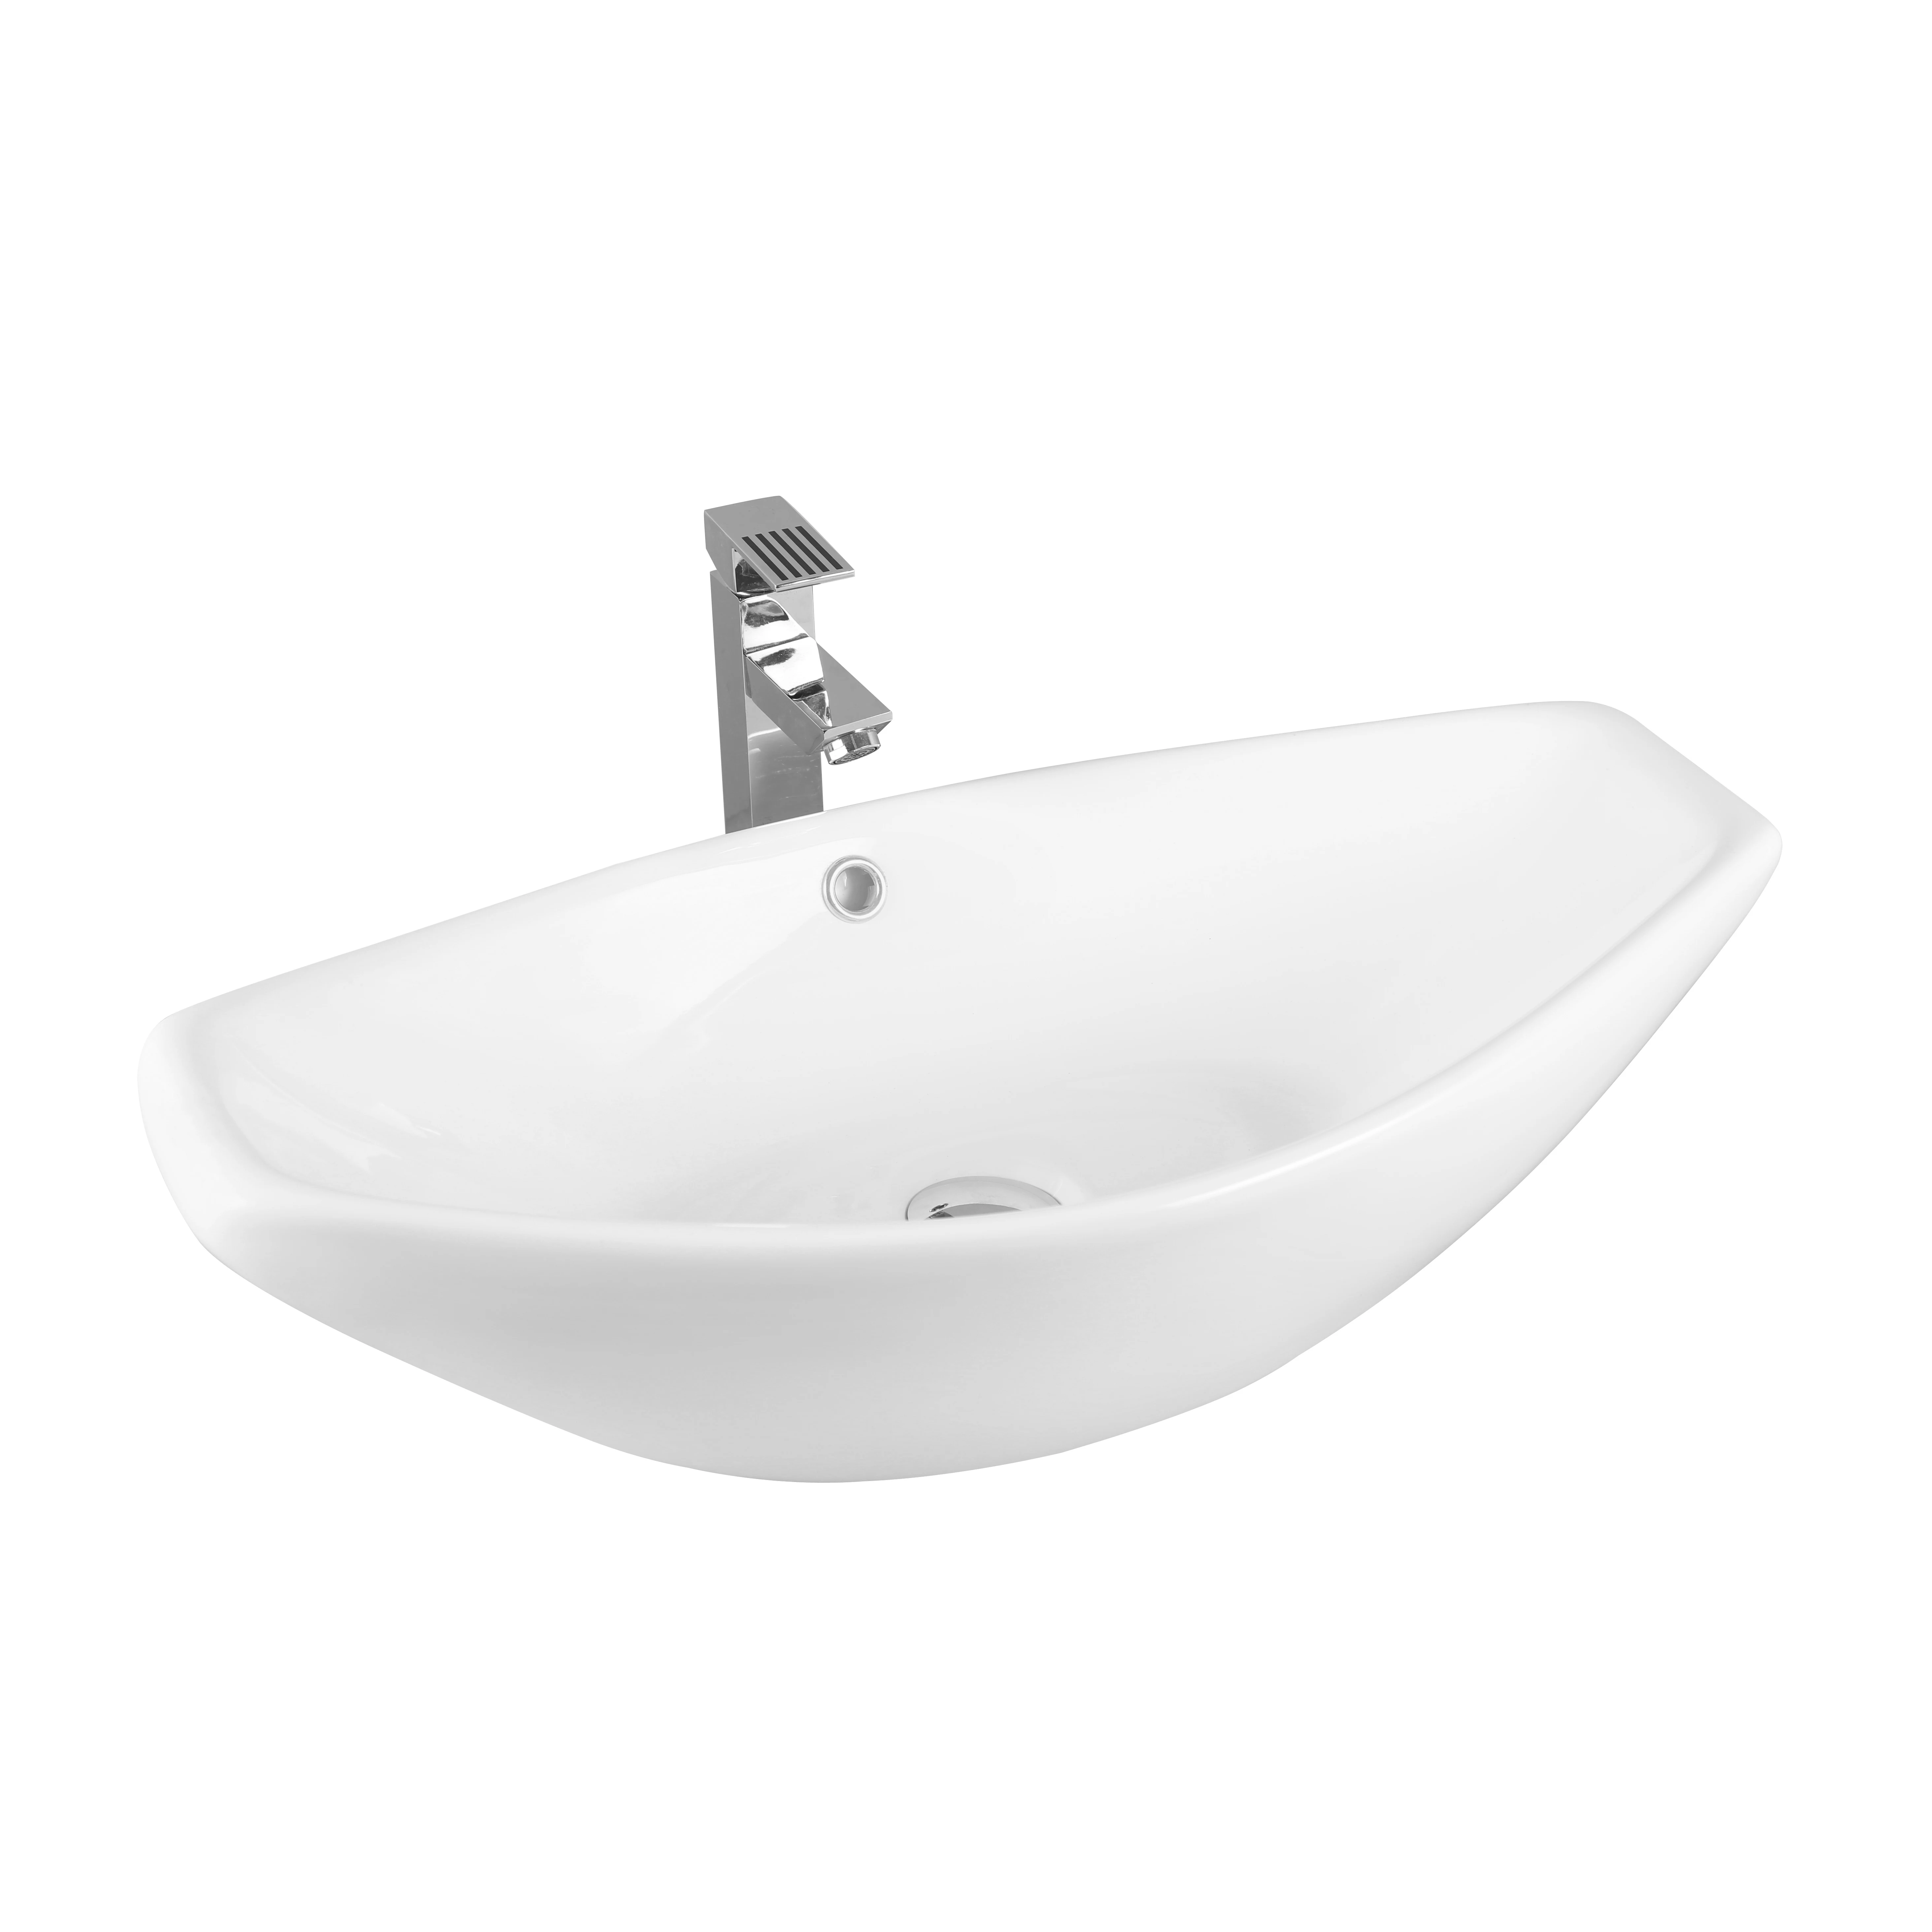 Modern Domestic Hotel Ceramic Sink Wash Basin Counter Tops Wholesale Price Bathroom Basin Sink Buy Wholesale Price Bathroom Basin Sink